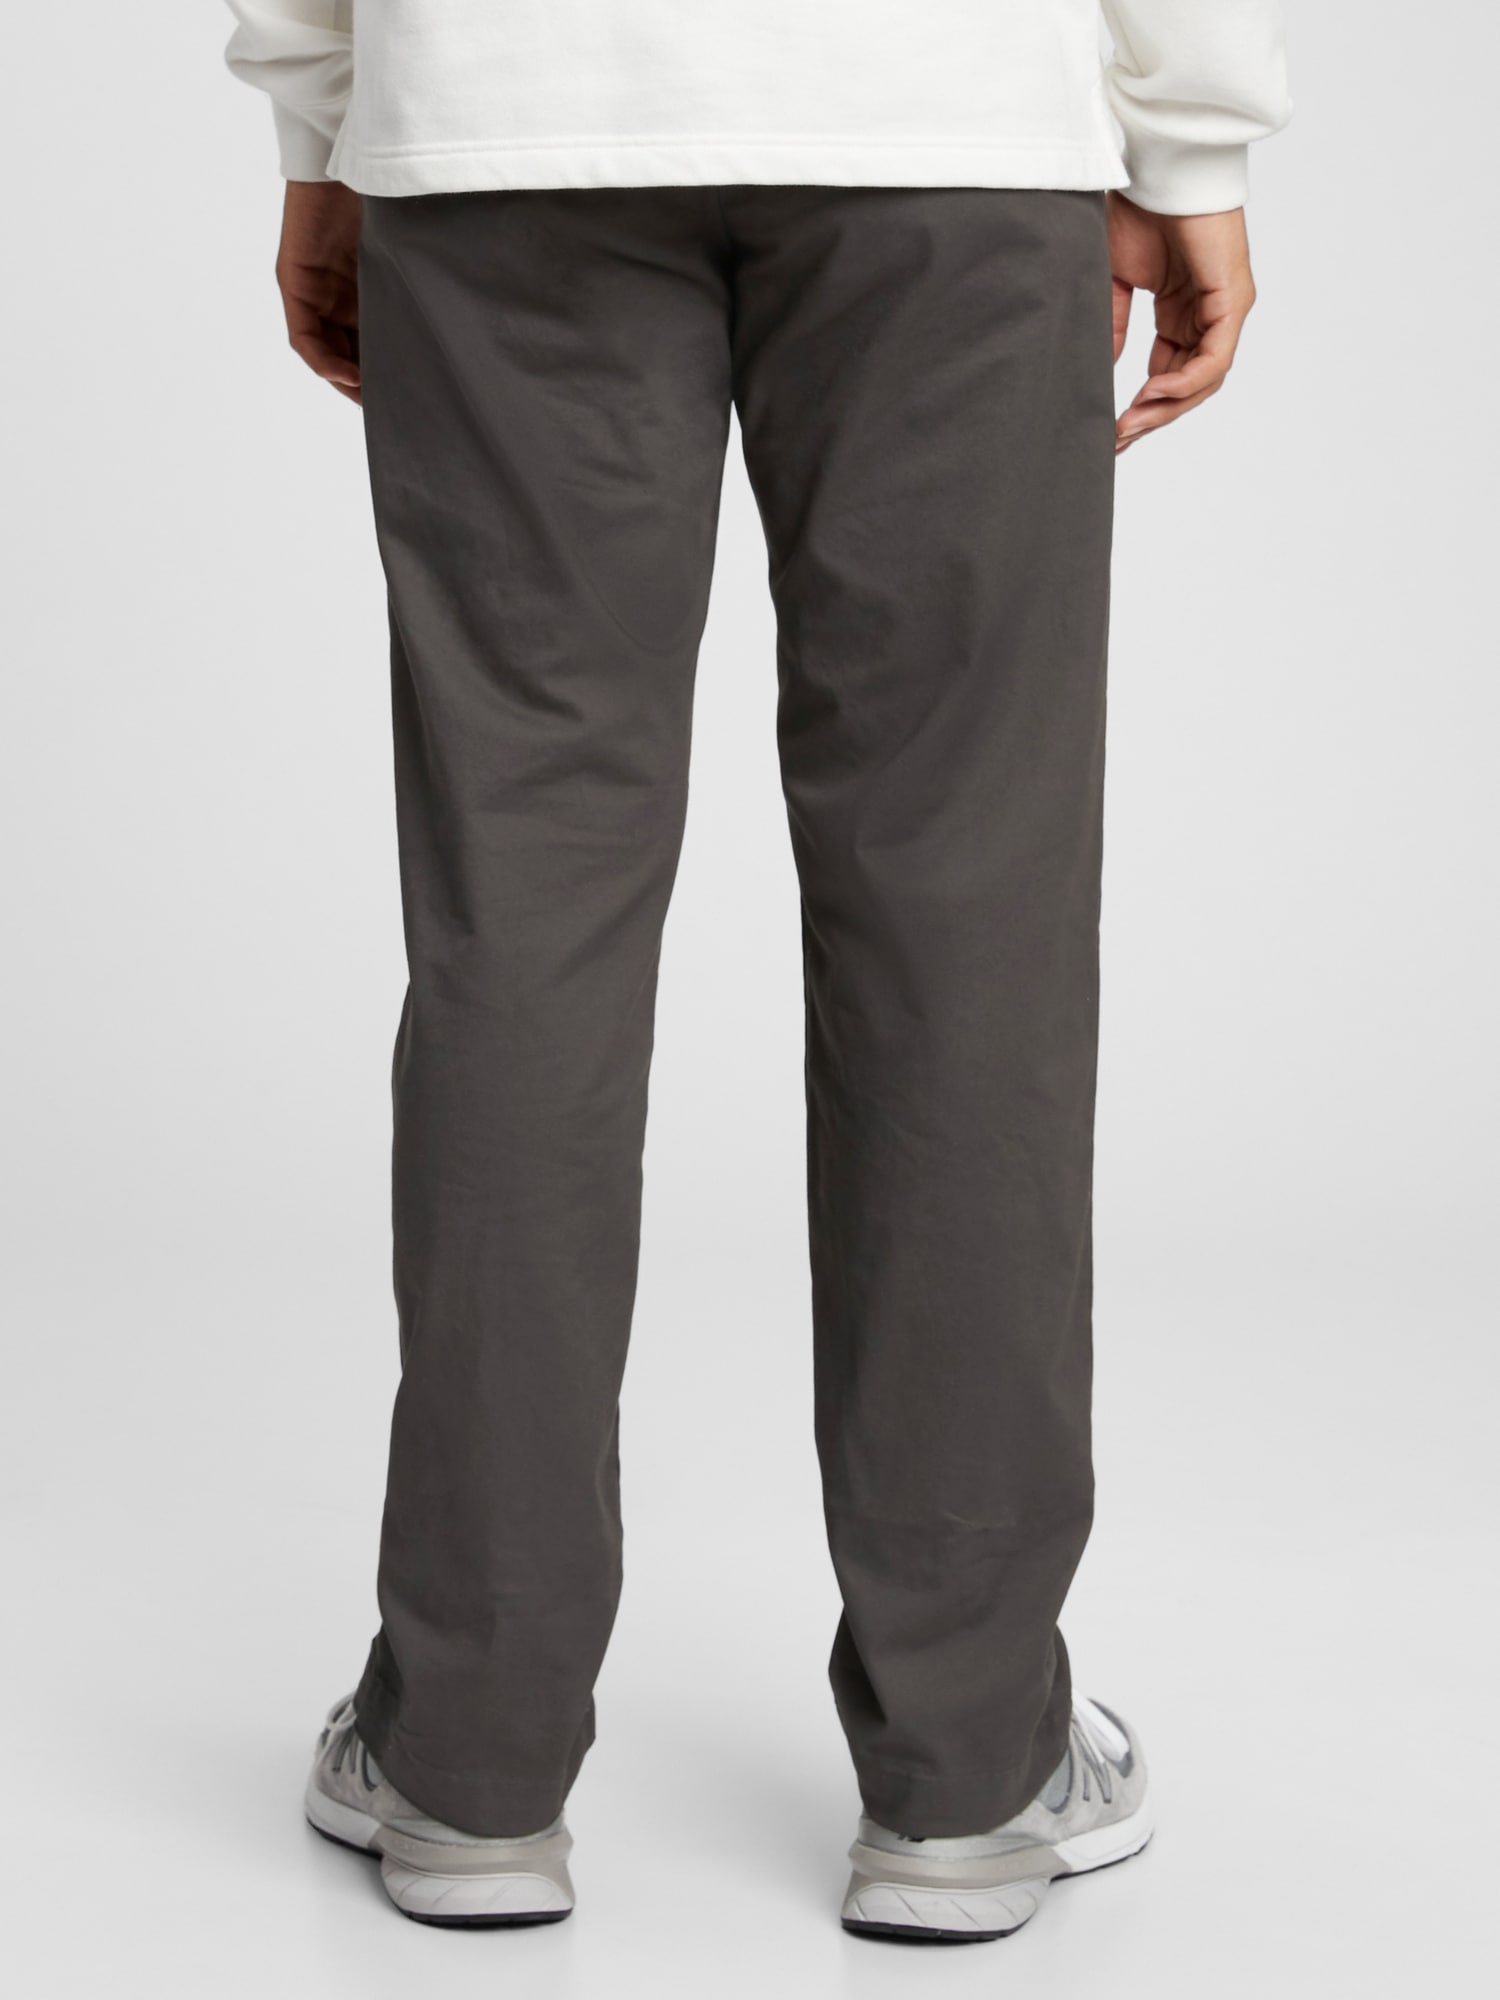 GAP, Pants, Gap Modern Khakis In Athletic Taper With Gapflex Nwt 32w 36l  Tall